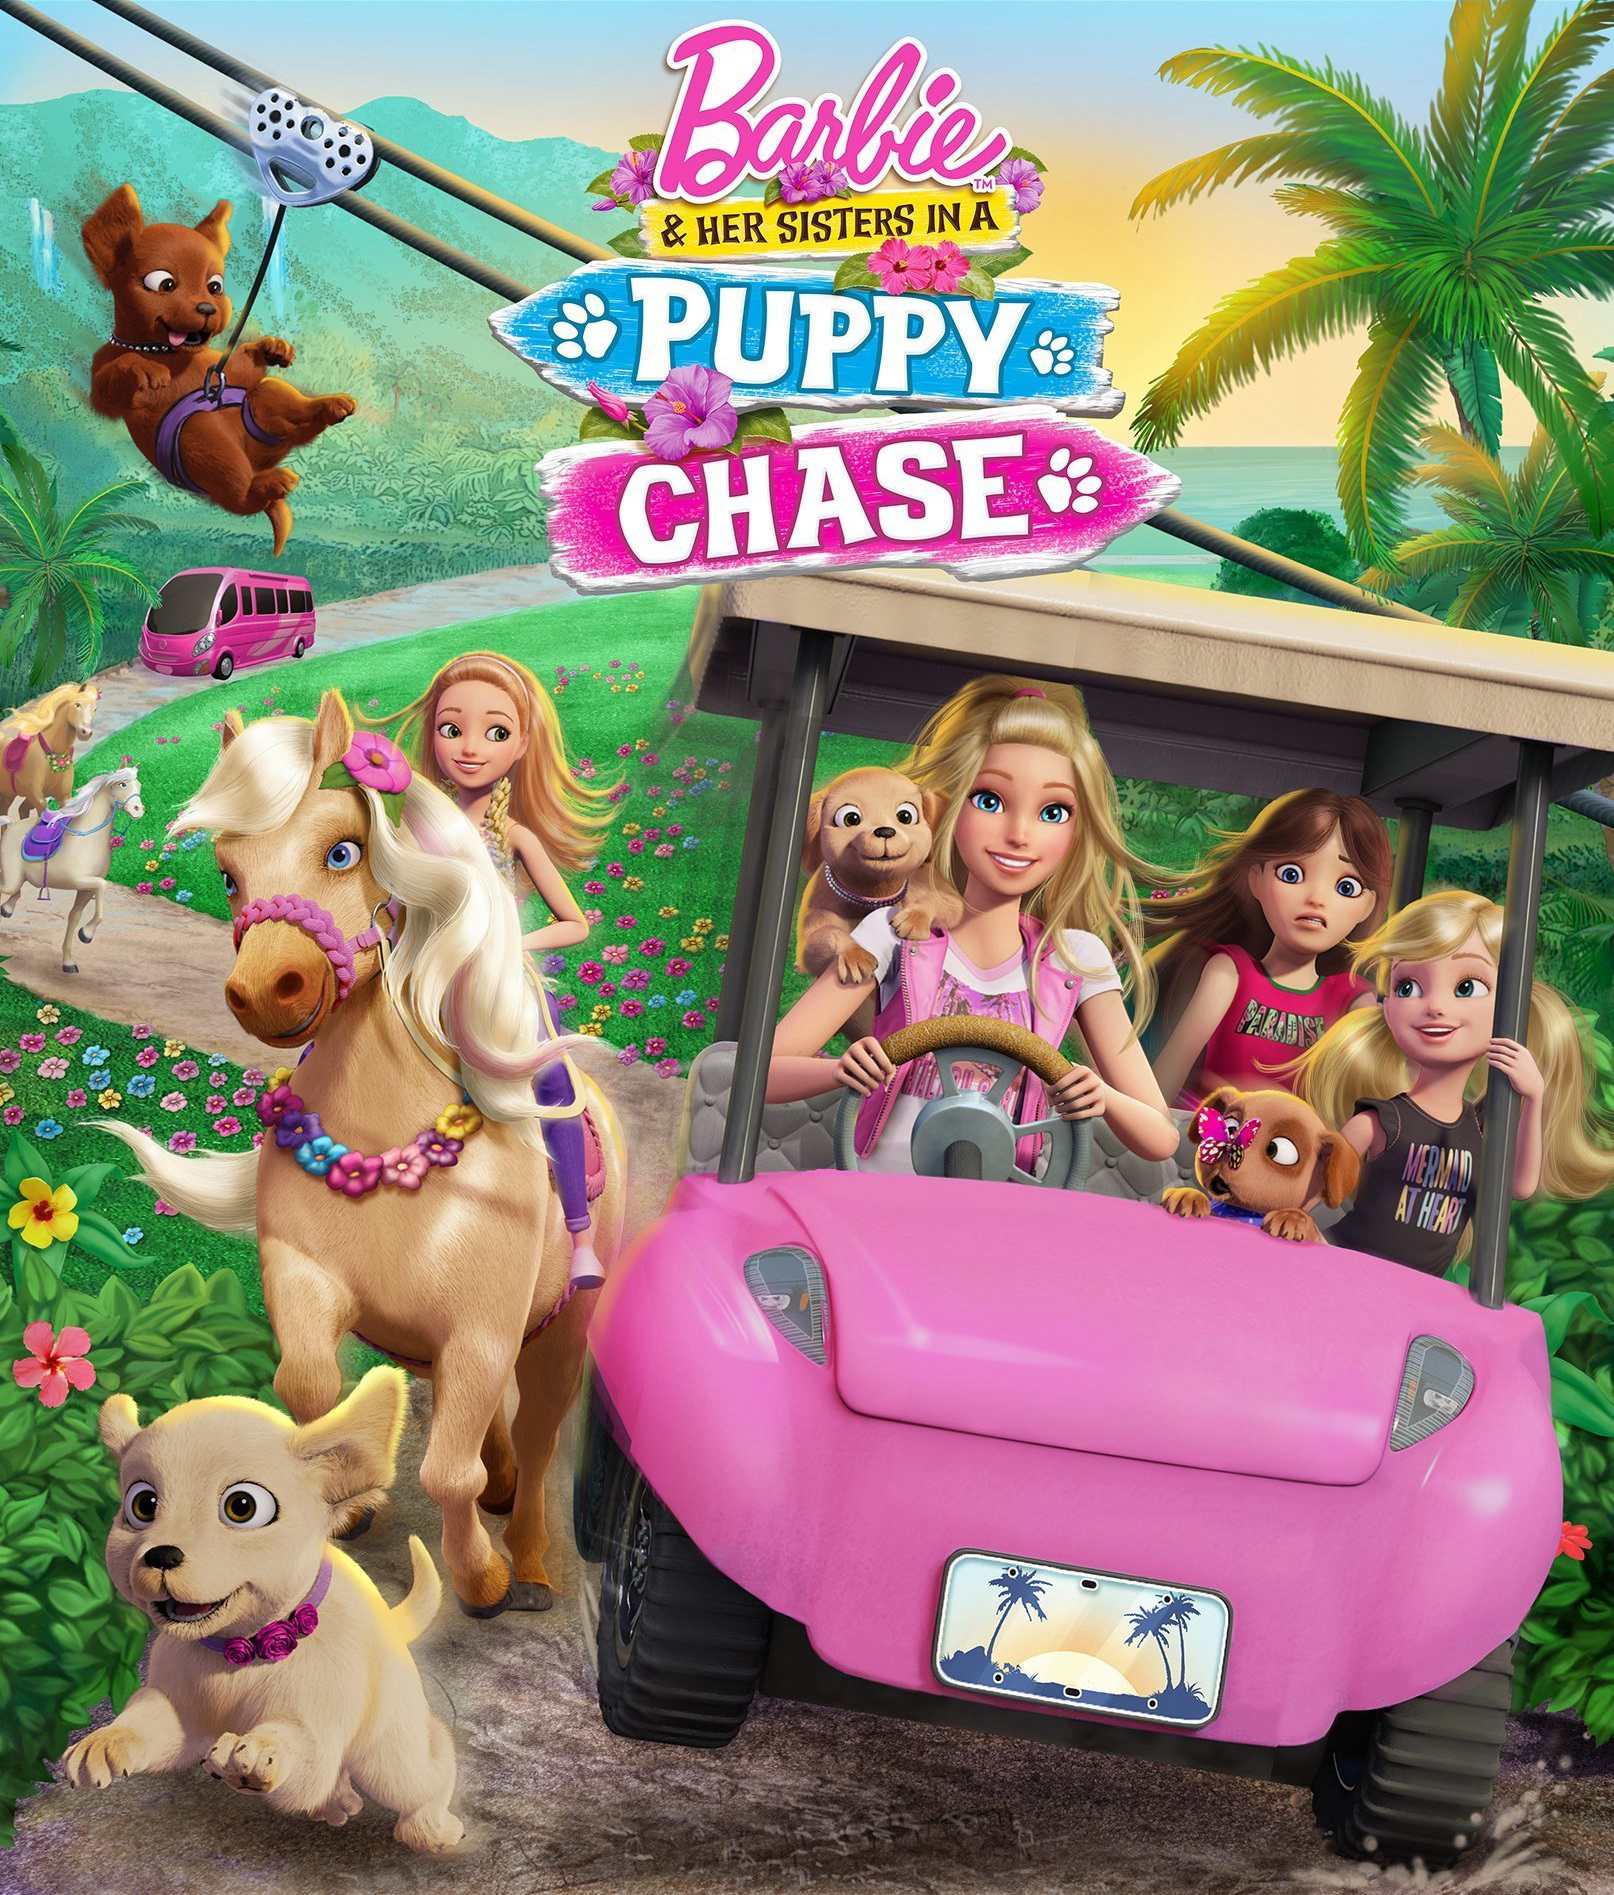 Poster Phim Chị em Barbie đuổi theo các chú cún (Barbie & Her Sisters in a Puppy Chase)